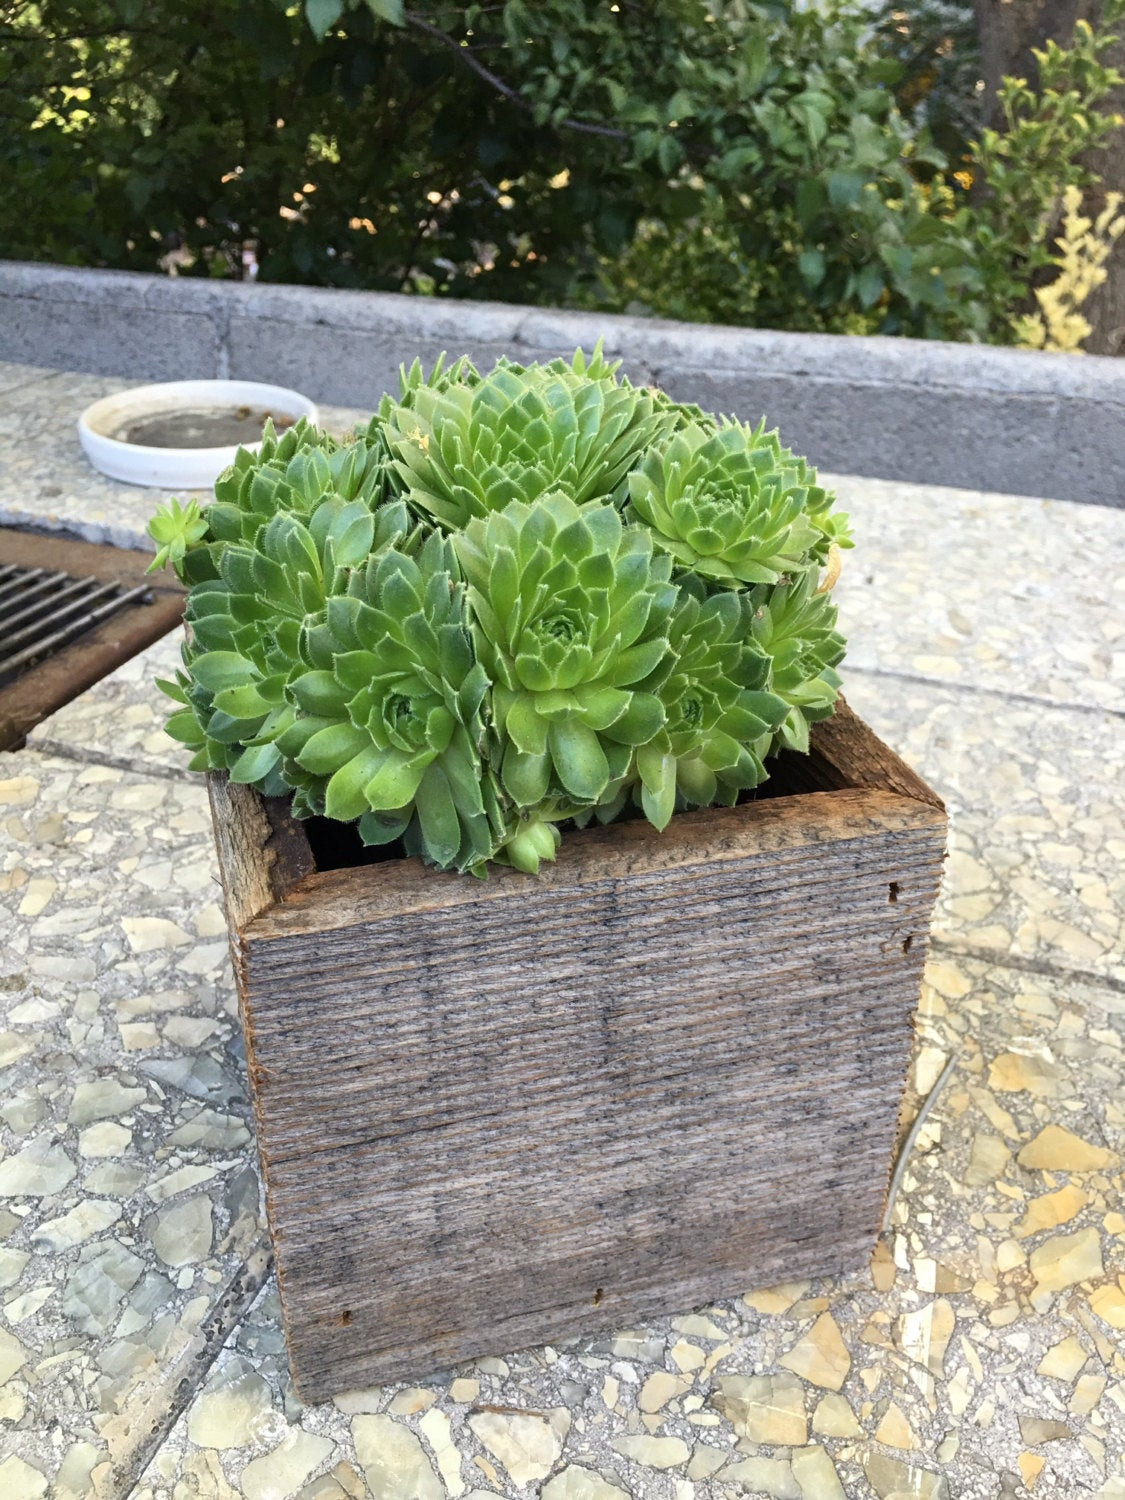 Best ideas about Succulent Planter Box
. Save or Pin 5 5x5 5x5 5 Succulent Planter Box Now.